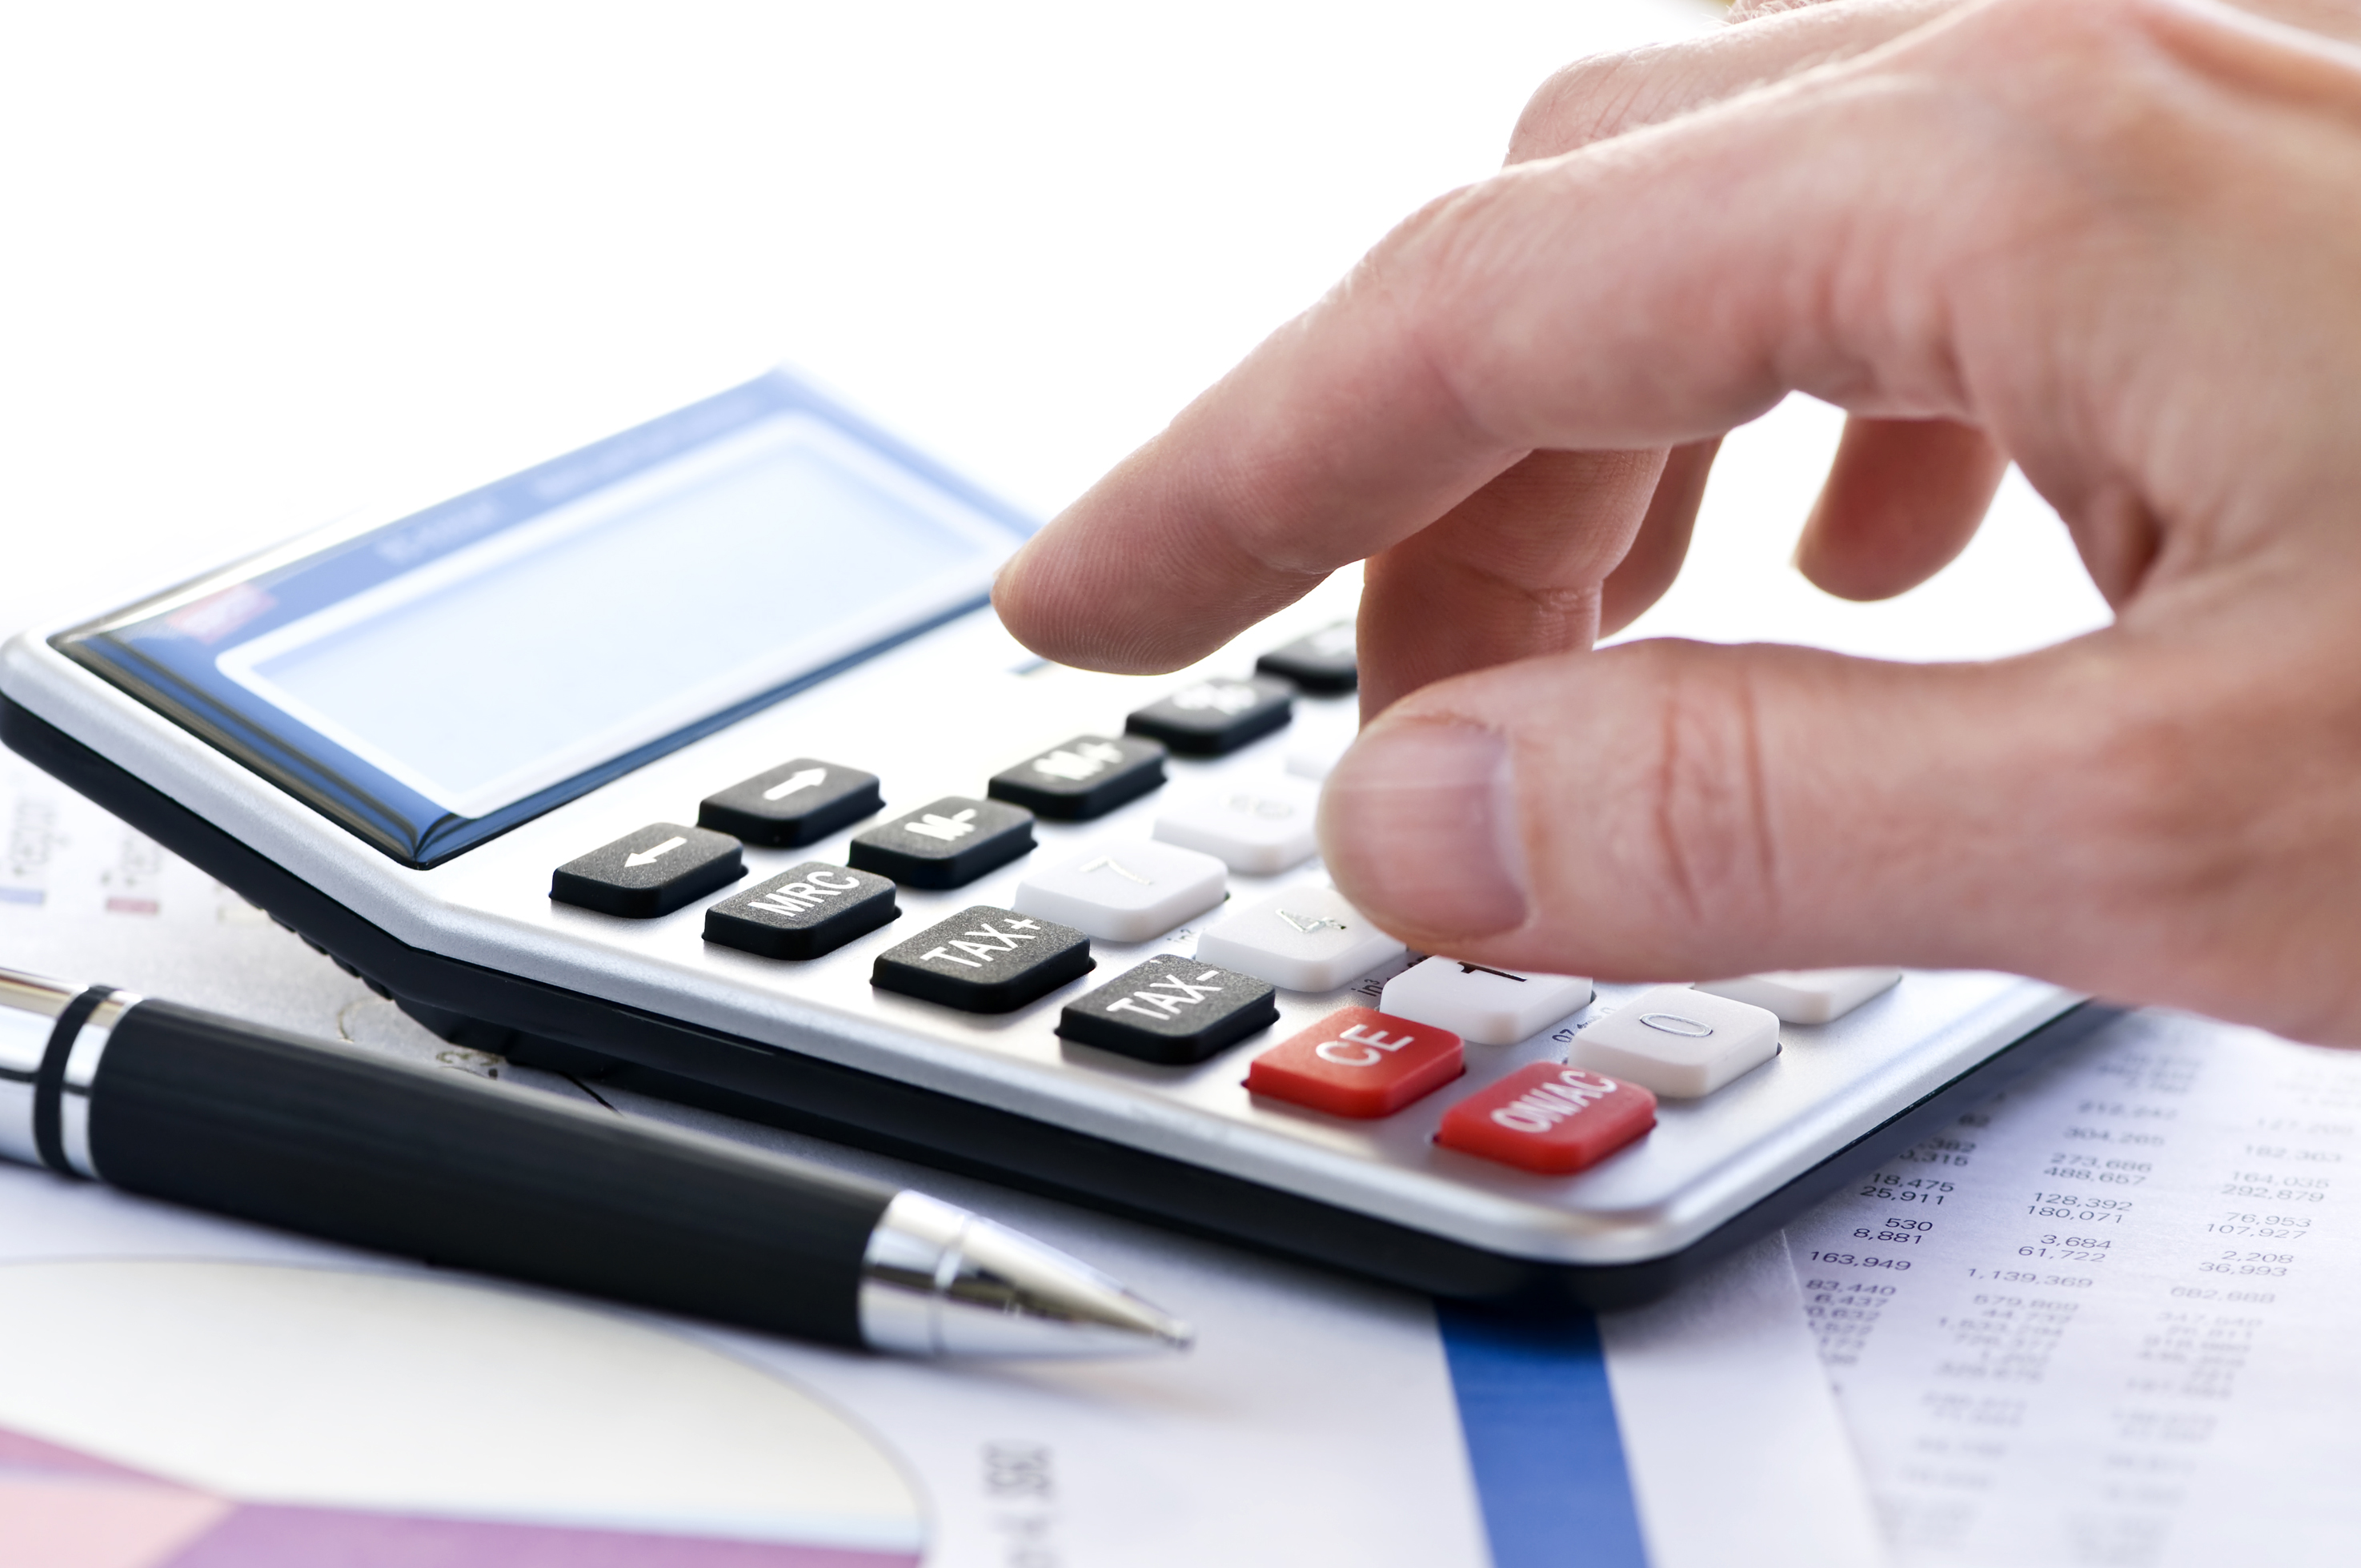 Tax calculator and pen